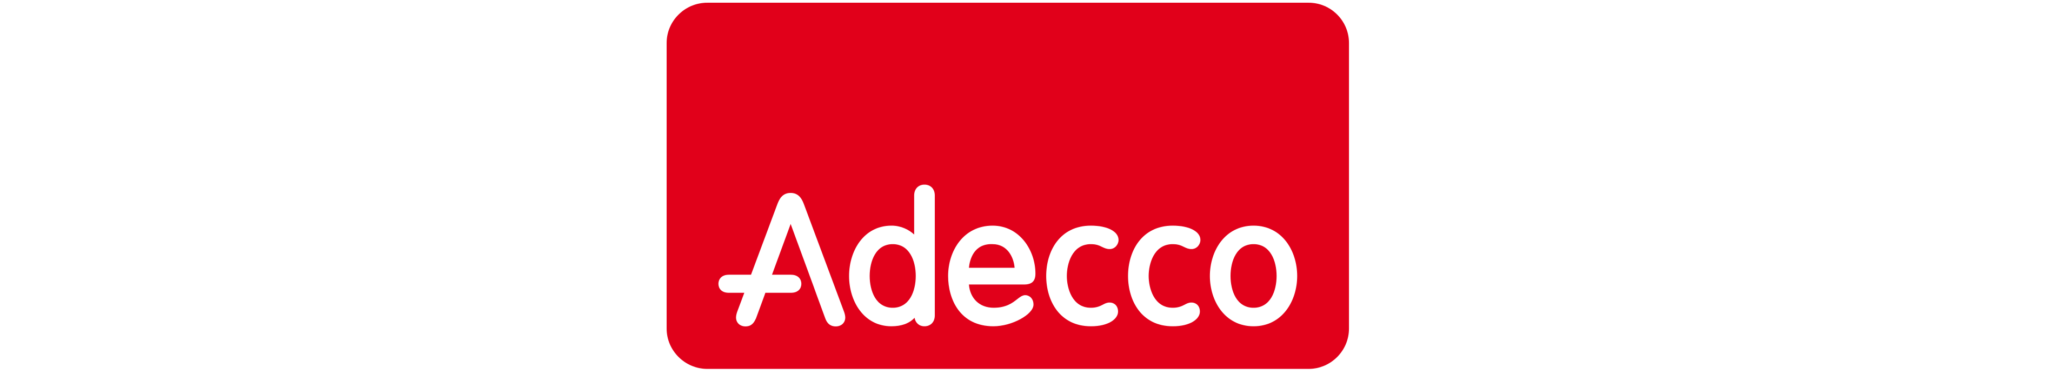 Inside Sales Representative - Adecco - Οικονομολόγος